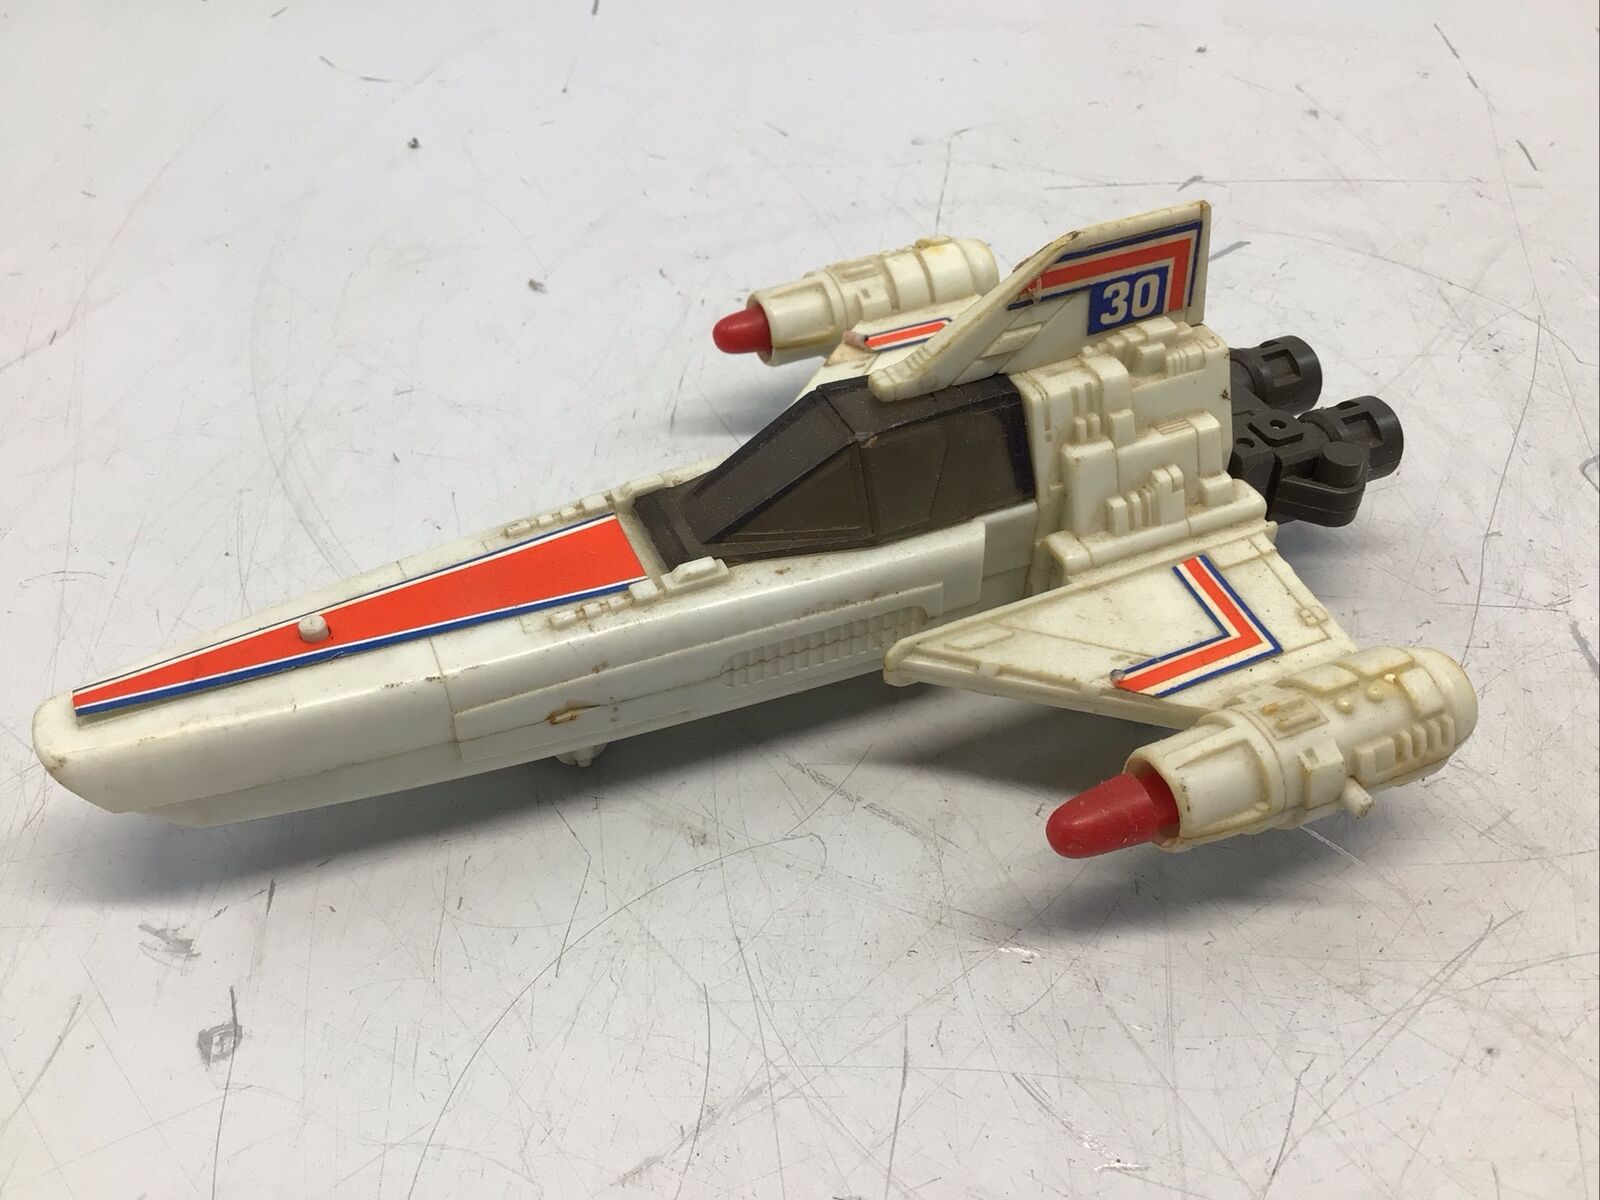 Battlestar Galactica Viper Battleship 30 1978 Vintage Mattel Toy